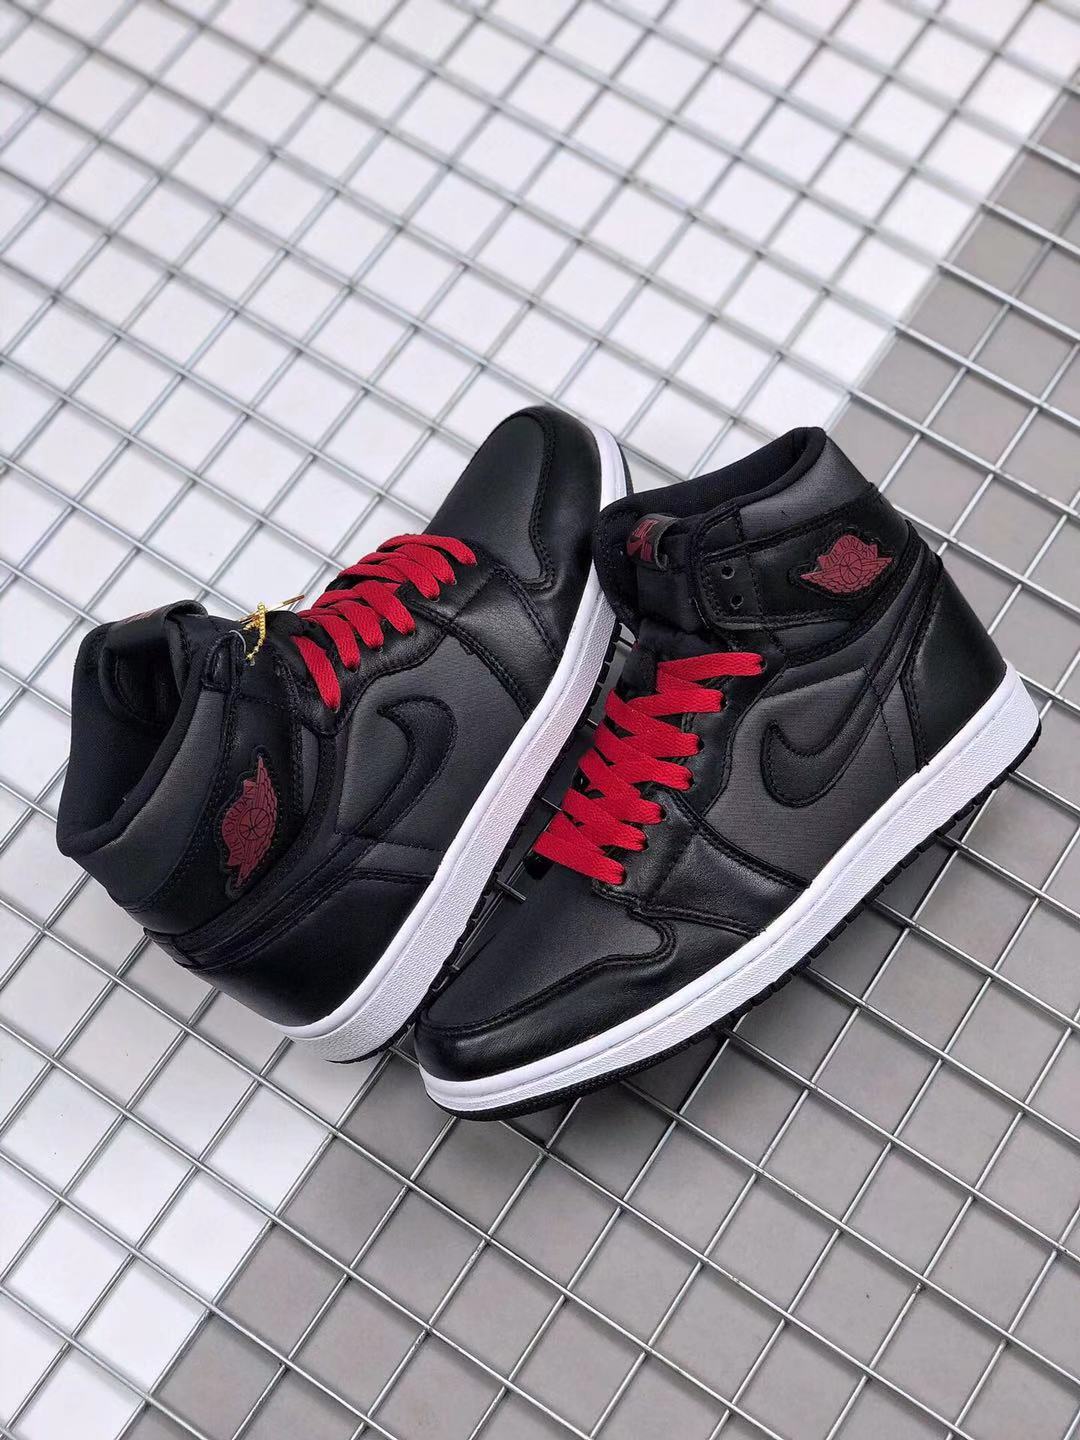 2020 Women Air Jordan 1 High OG Black Satin Shoes